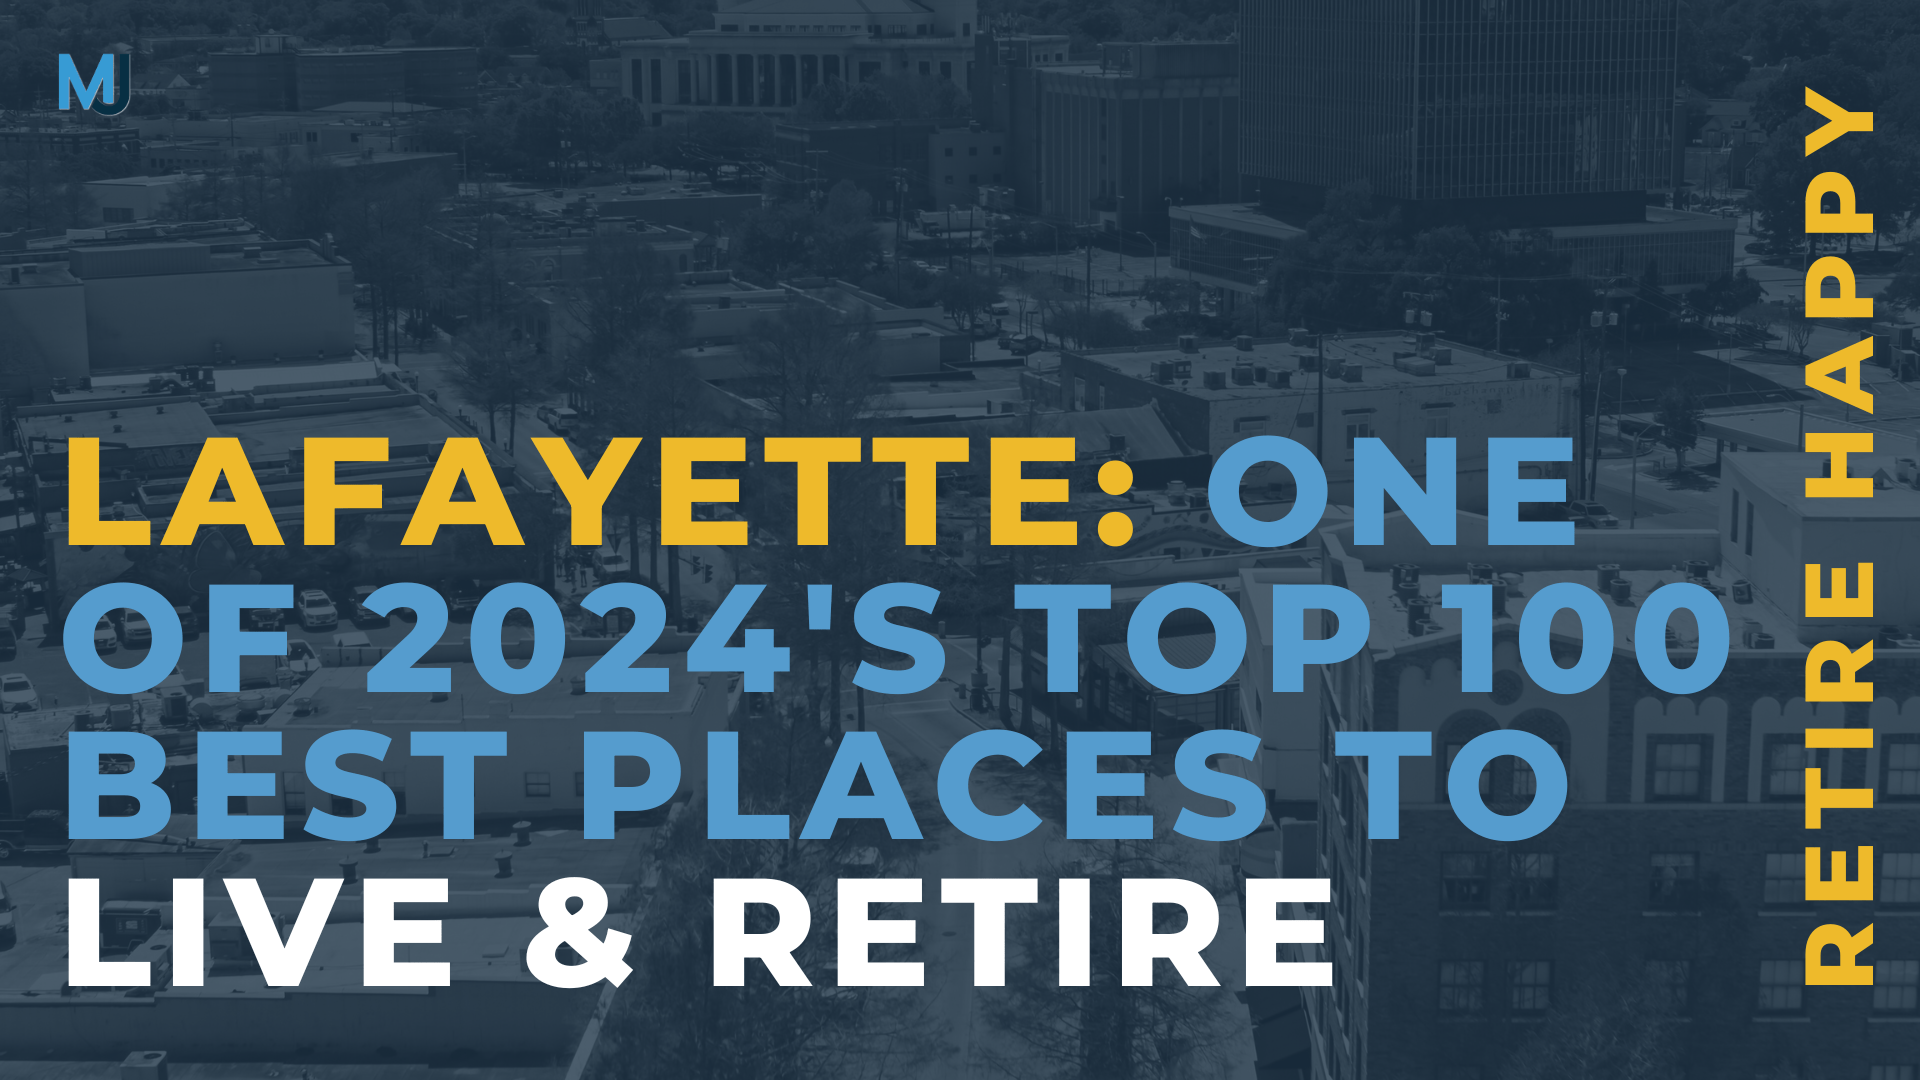 LAFAYETTE 2024 BEST PLACE TO RETIRE 